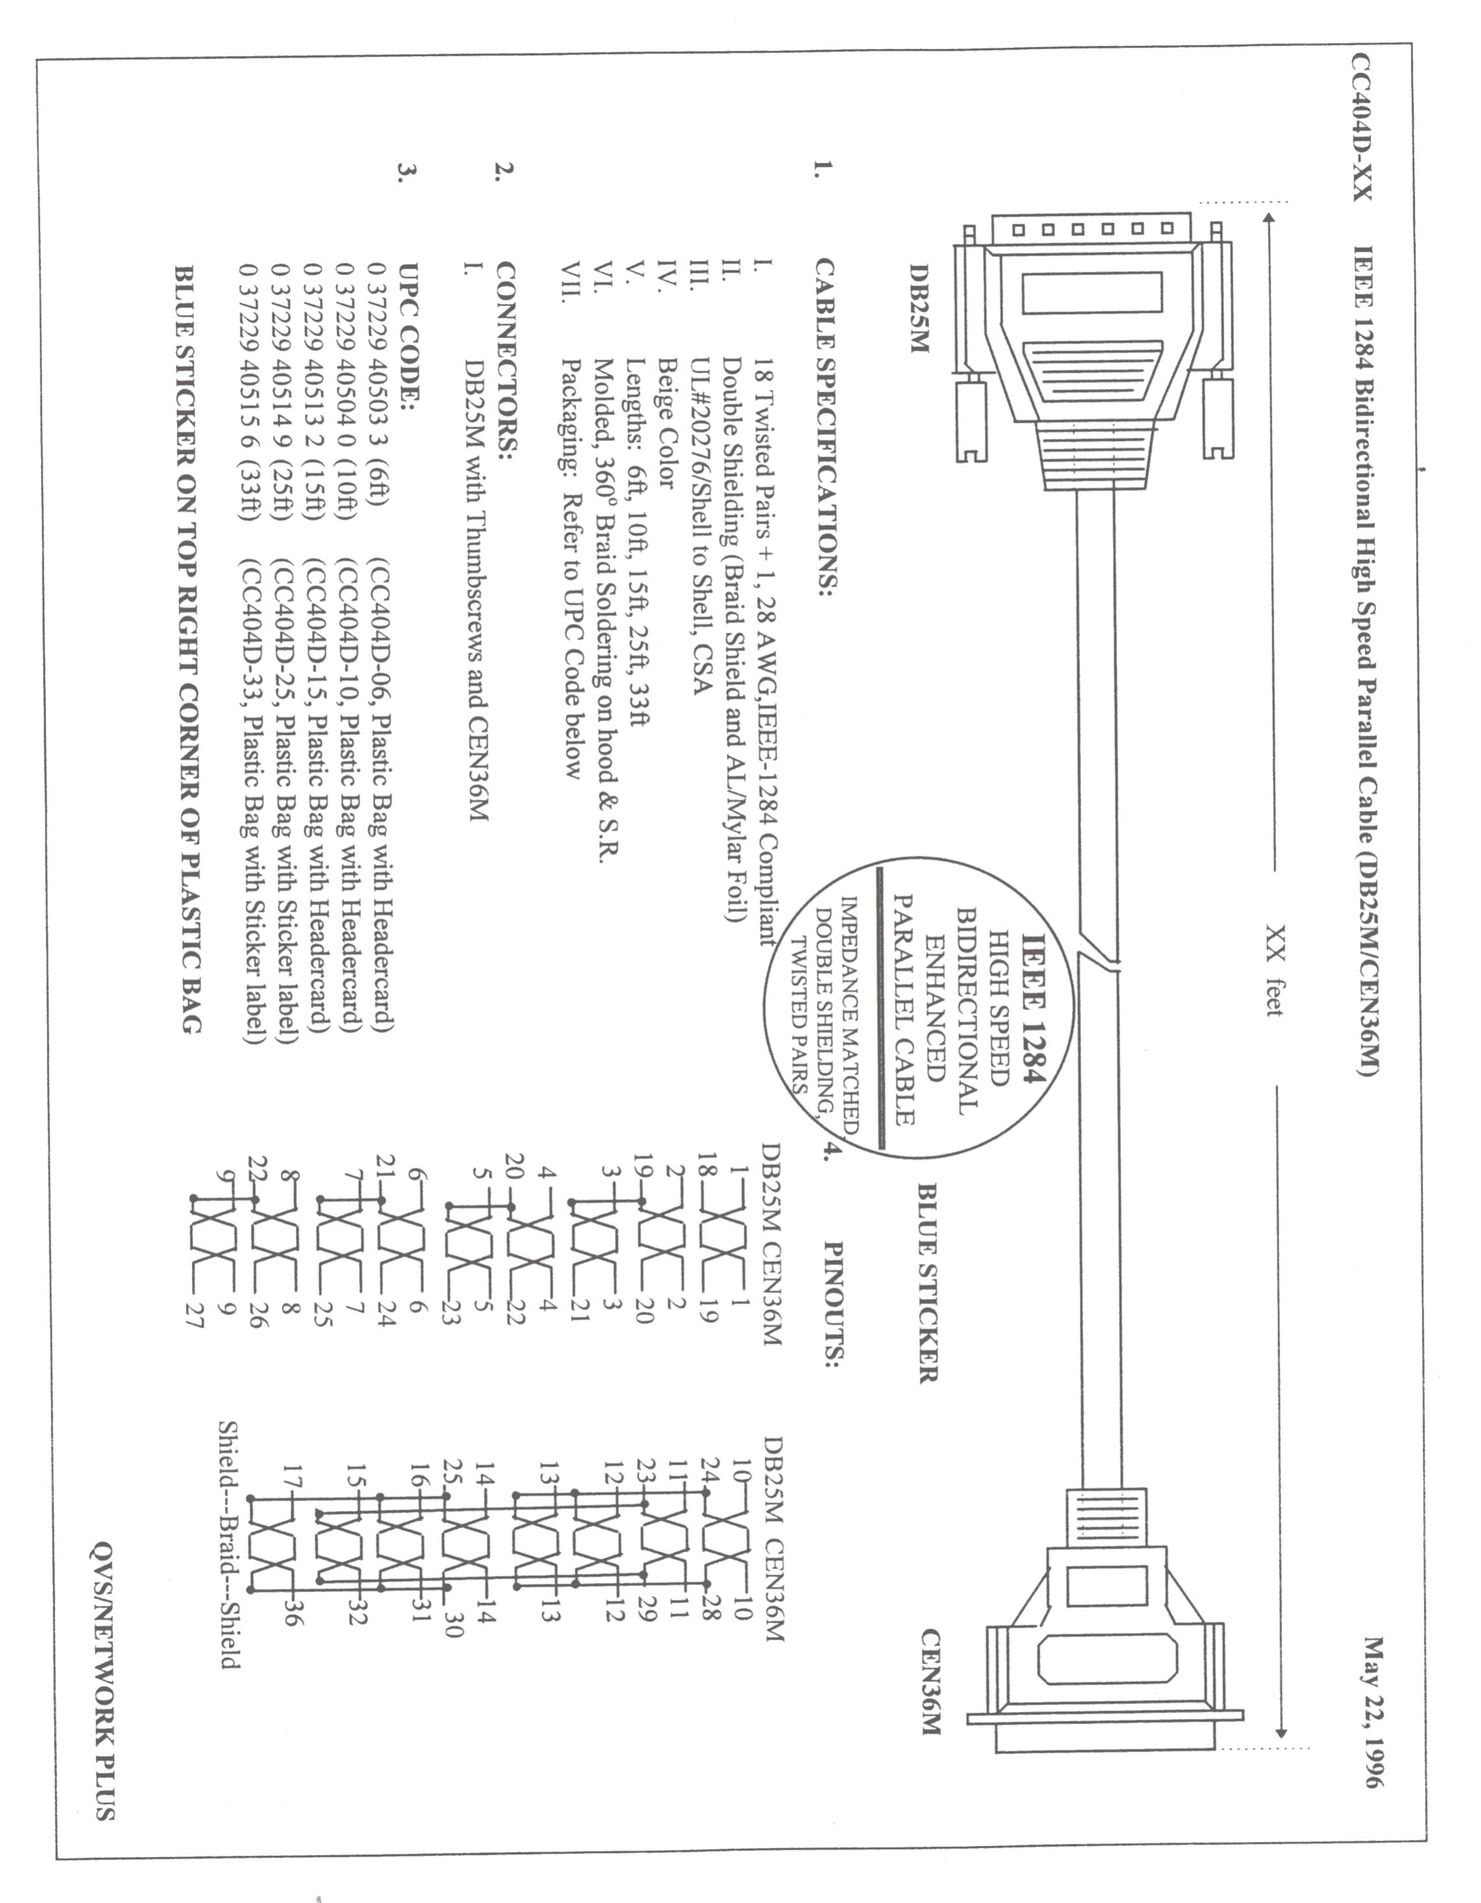 QVS CEN36M Stereo System User Manual